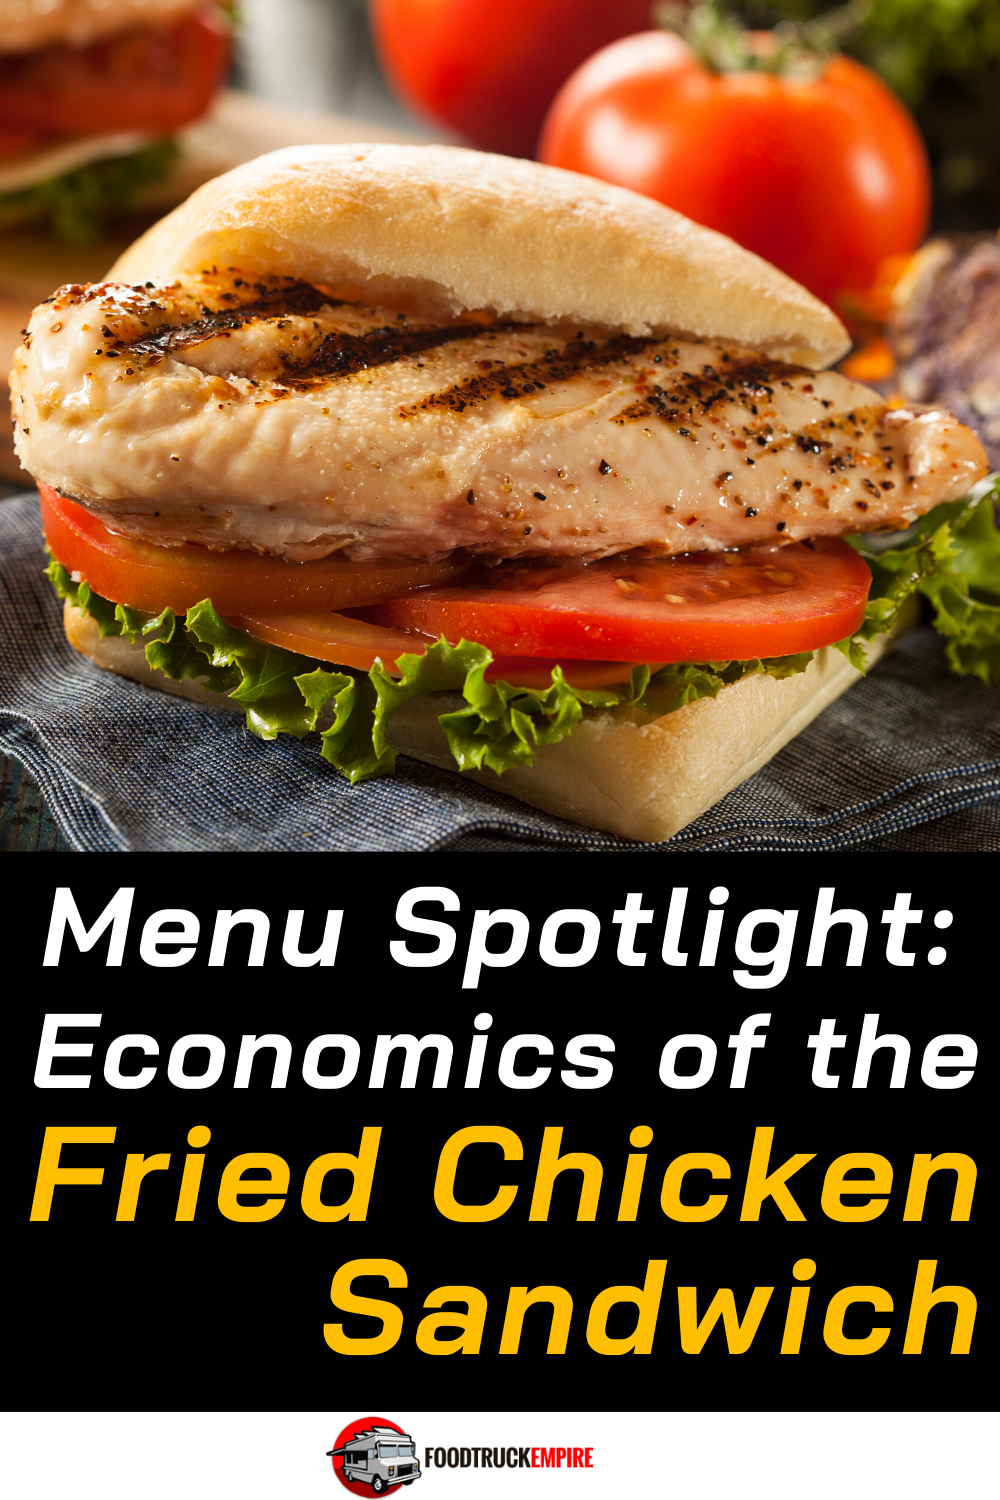 Economics of the Fried Chicken Sandwich